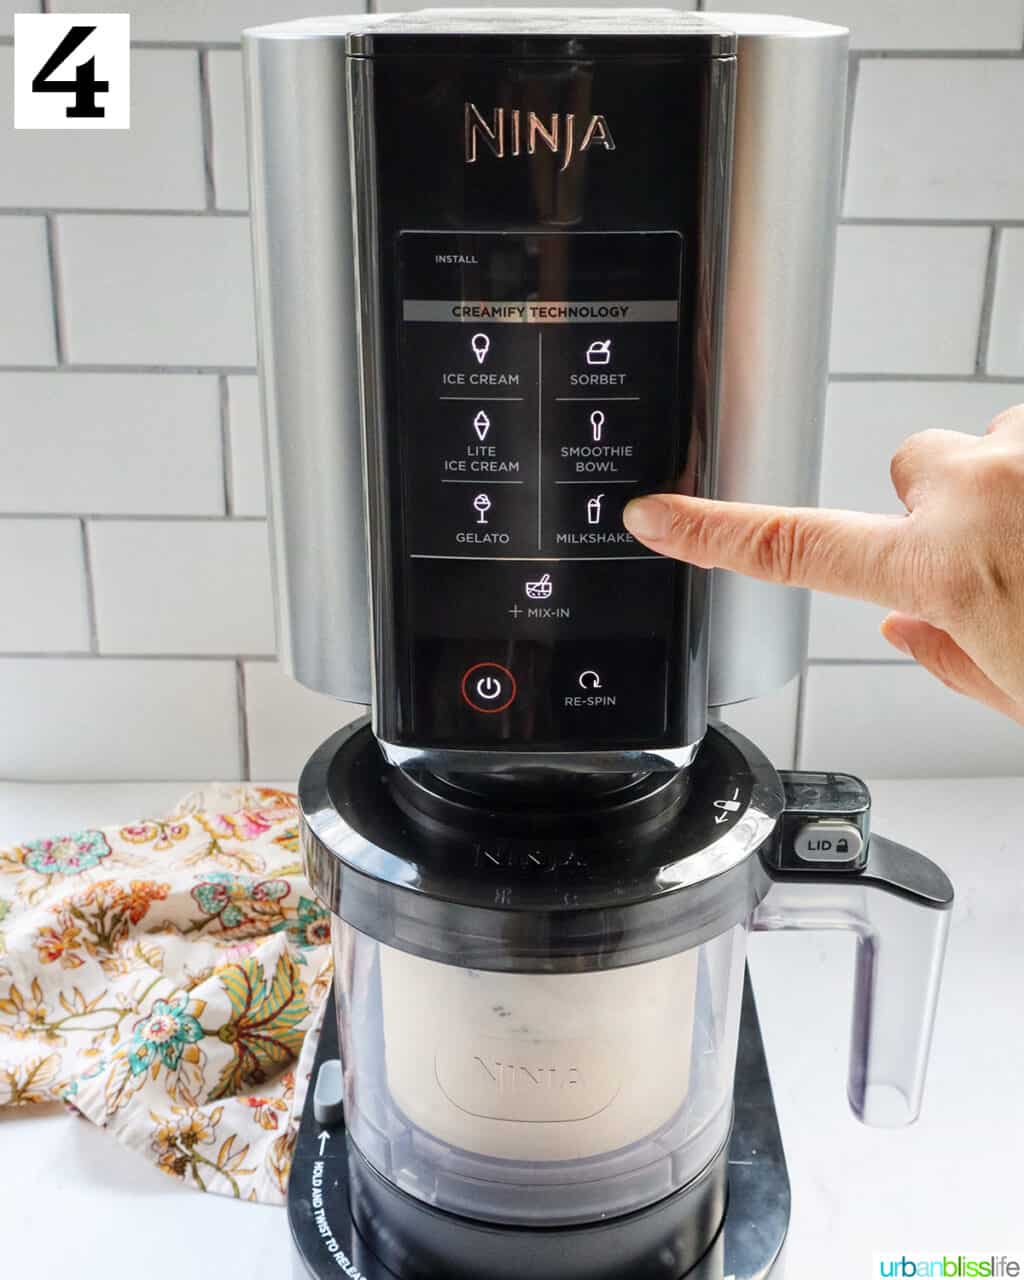 finger pressing the Milkshake setting on the Ninja Creami machine.